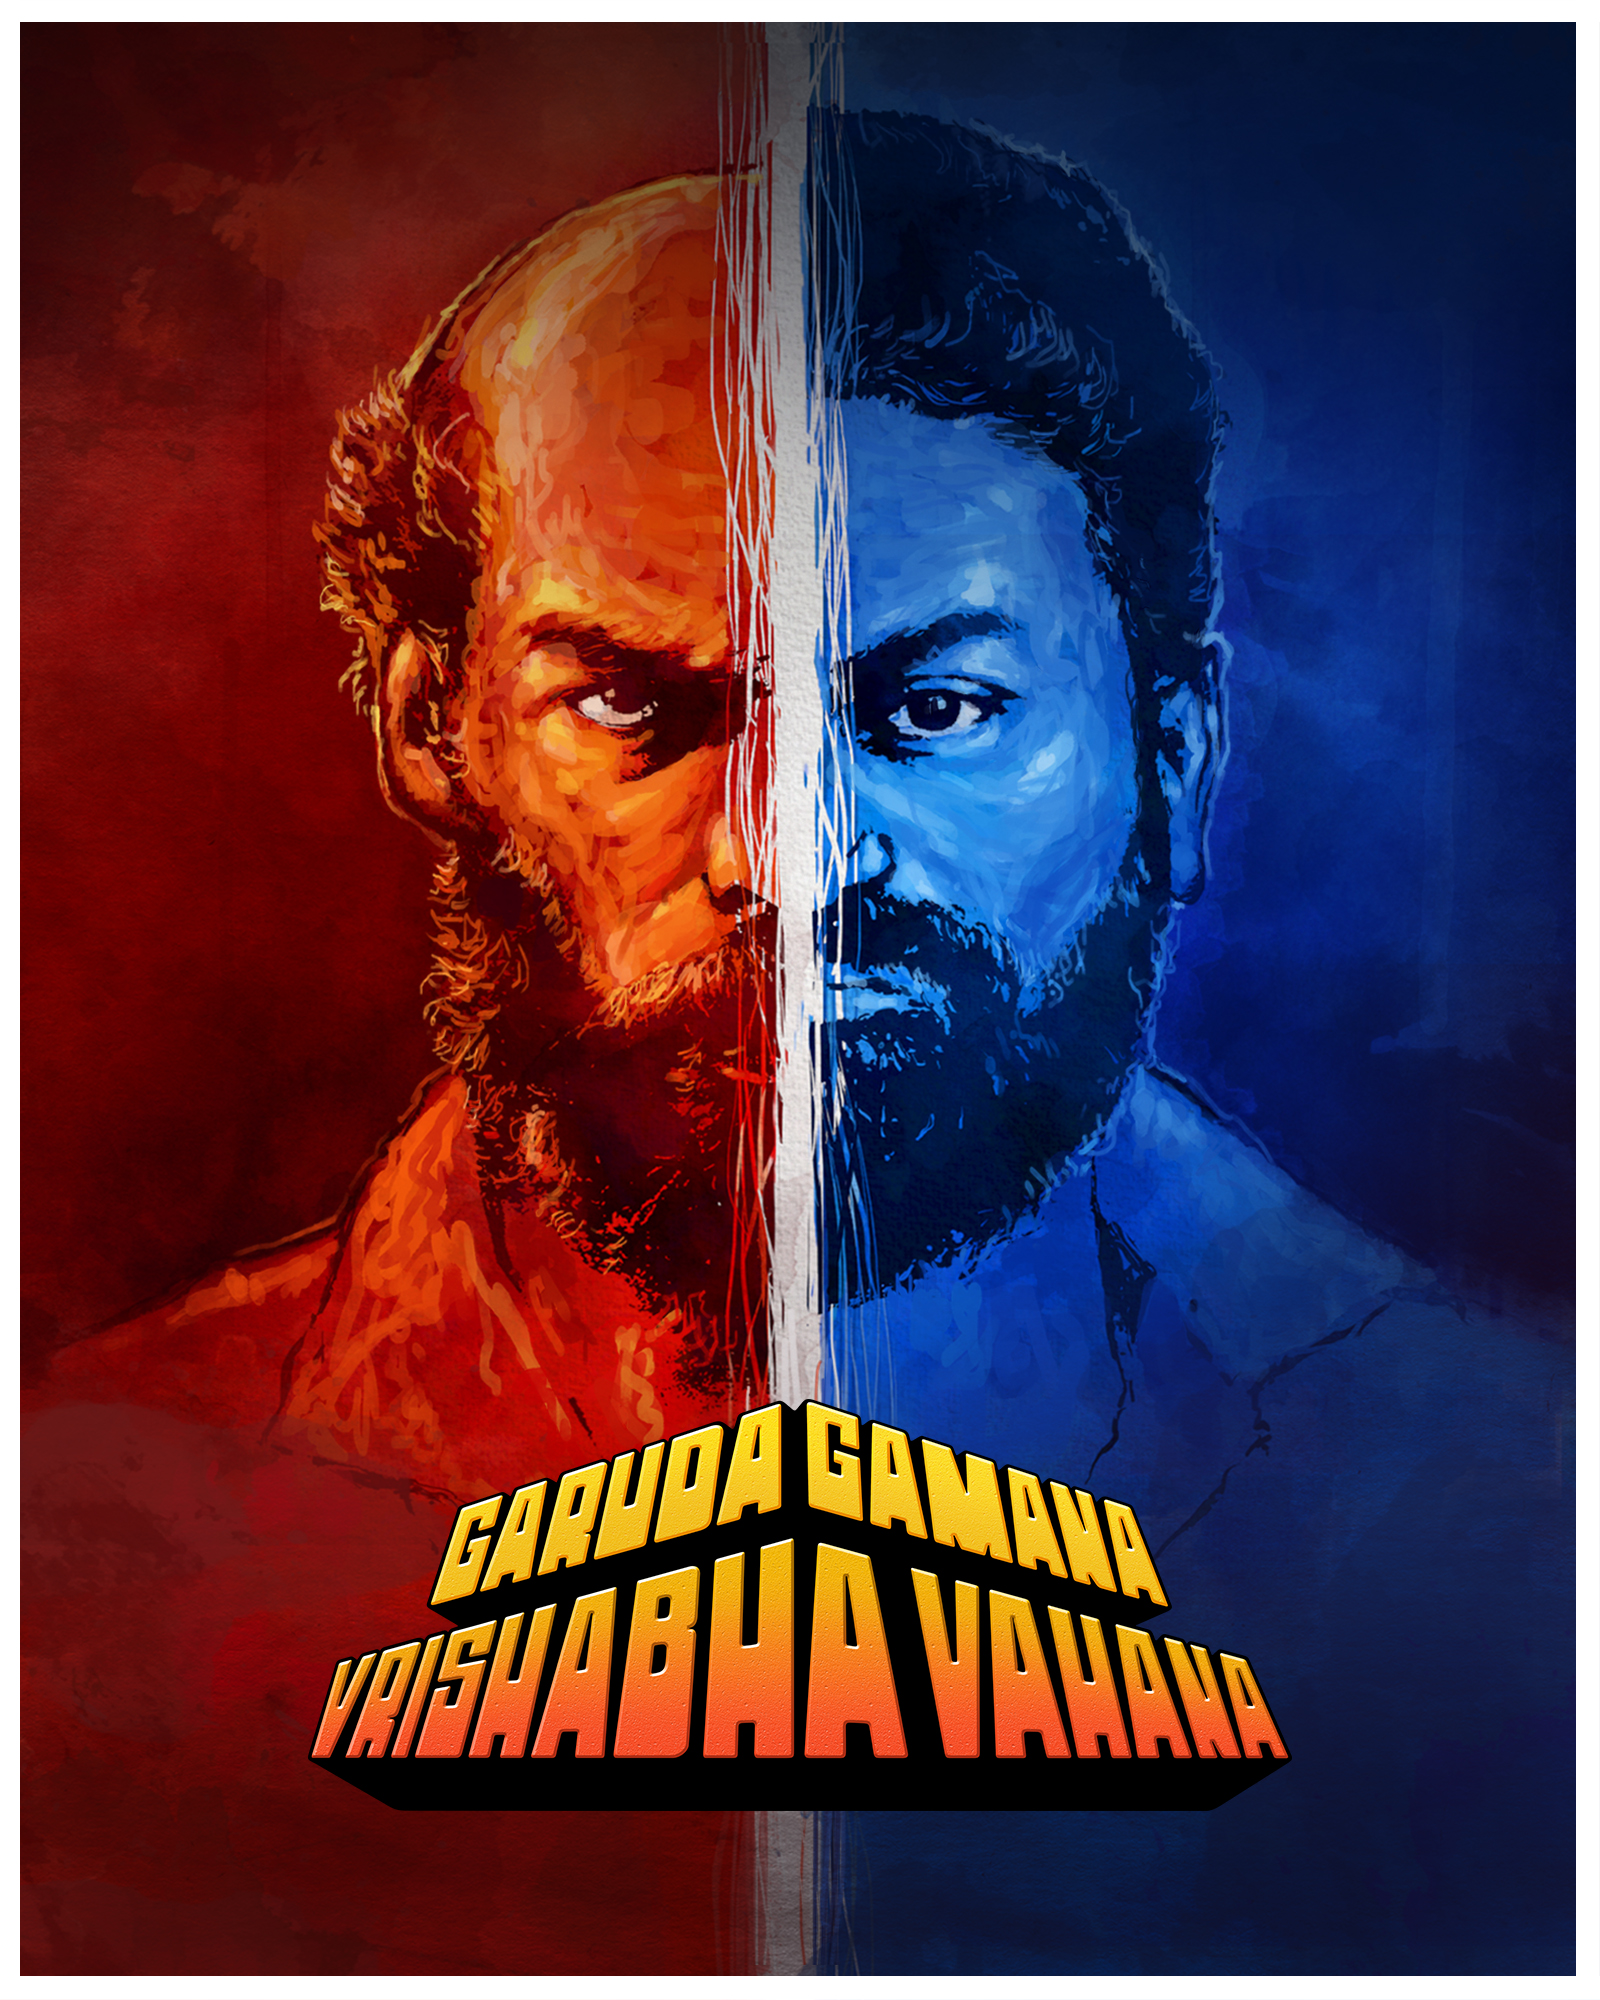 Garuda Gamana Vrishabha Vahana (2021) постер